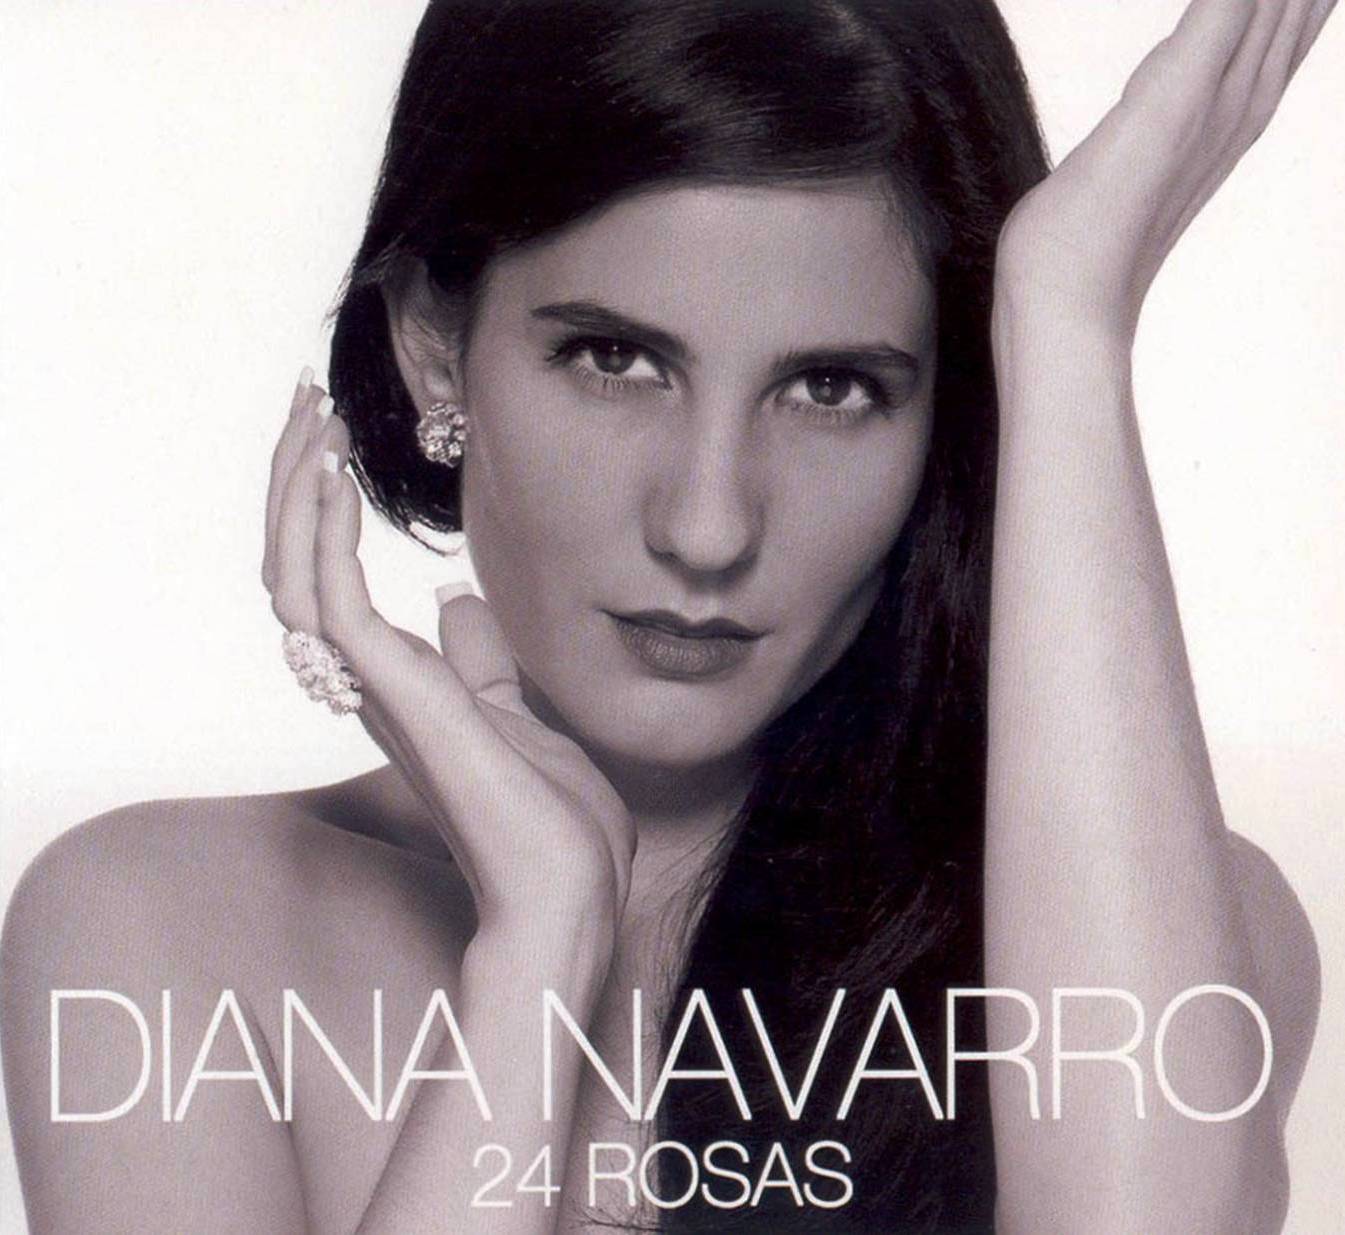 http://3.bp.blogspot.com/-FHC29w8ZnBE/T8iFol6ovNI/AAAAAAAAA9s/9LKsIoL82W8/s1600/Diana+Navarro+24+rosas+2007.jpg